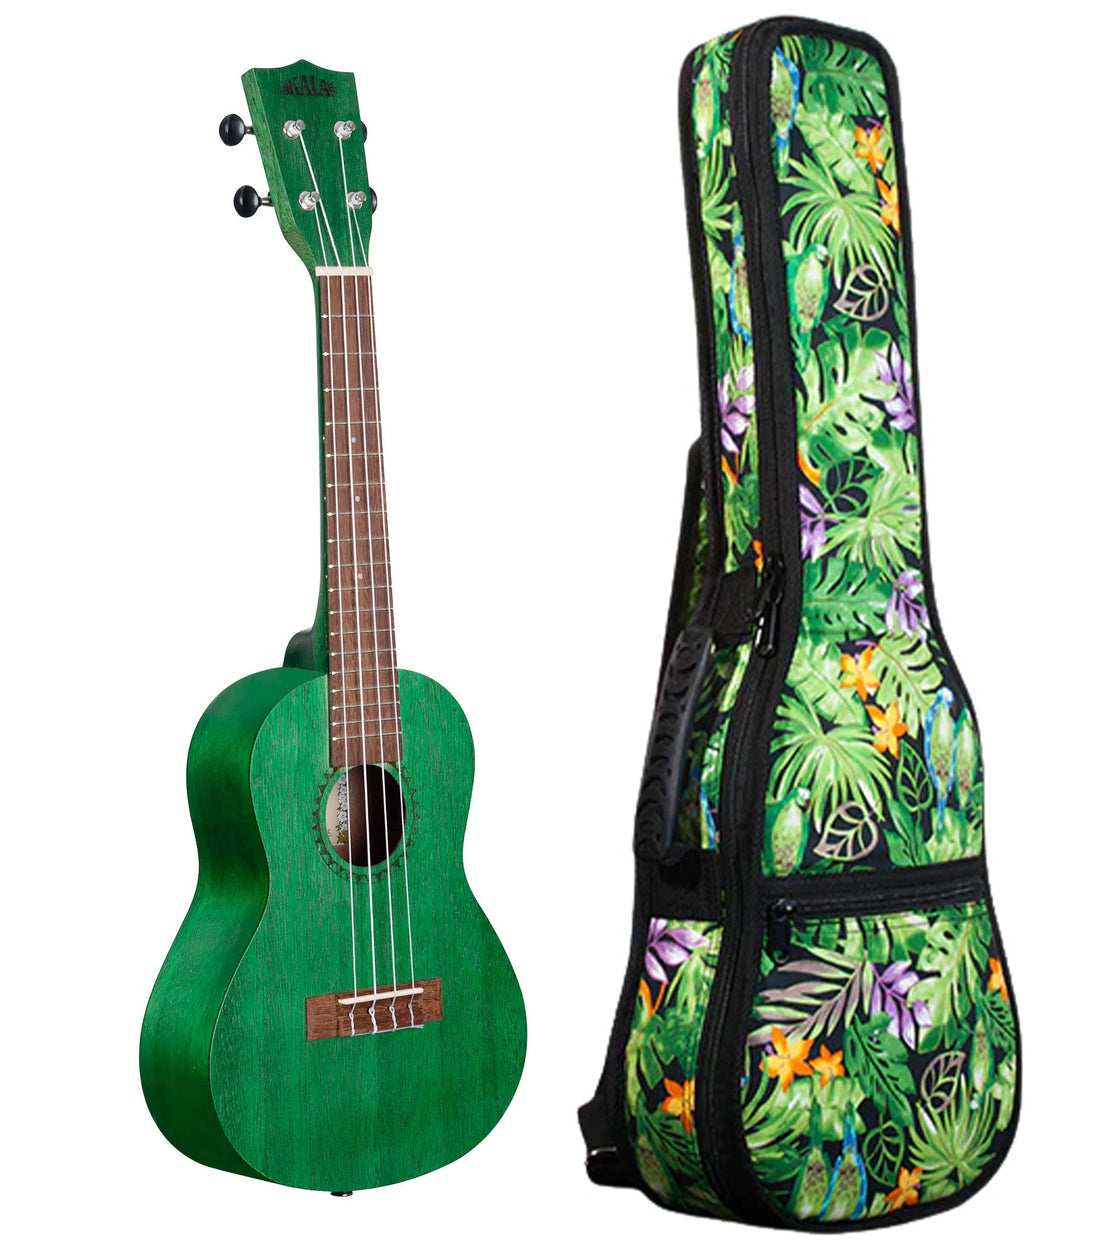 KA-MRT-GRN-C Fern Green Watercolor Meranti Concert Ukulele Includes Gigbag Floral Print, Padded with Backpack Straps